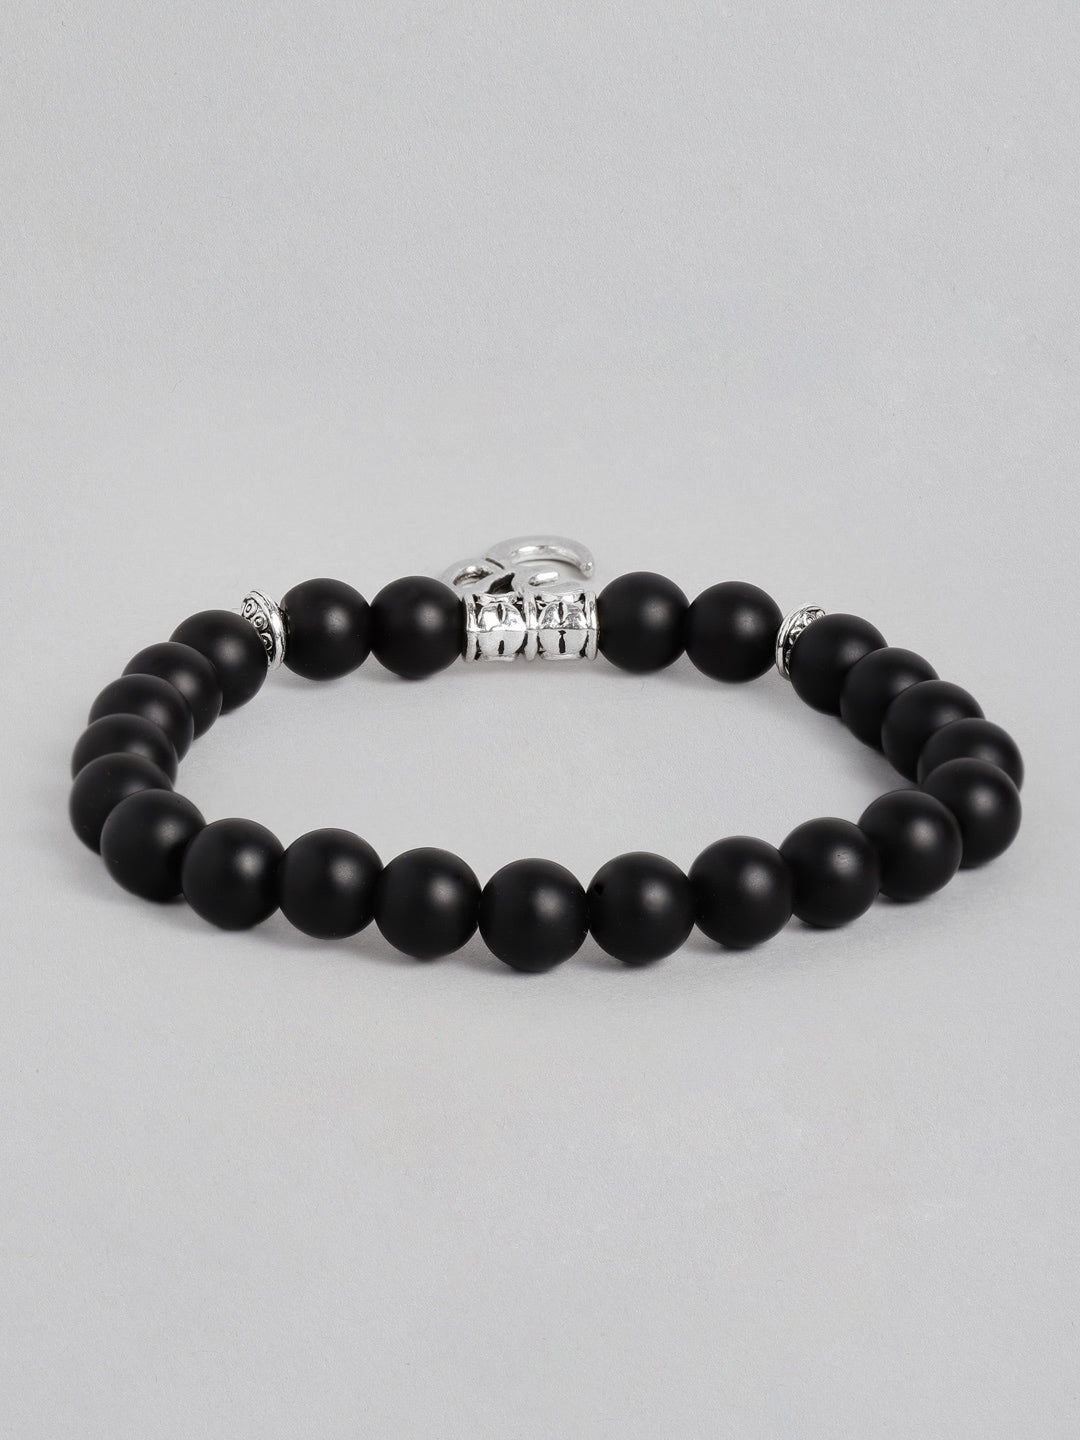 EL REGALO Men Black & Silver-Toned Handcrafted Om Elasticated Charm Bracelet - for Men
Style ID: 16186540